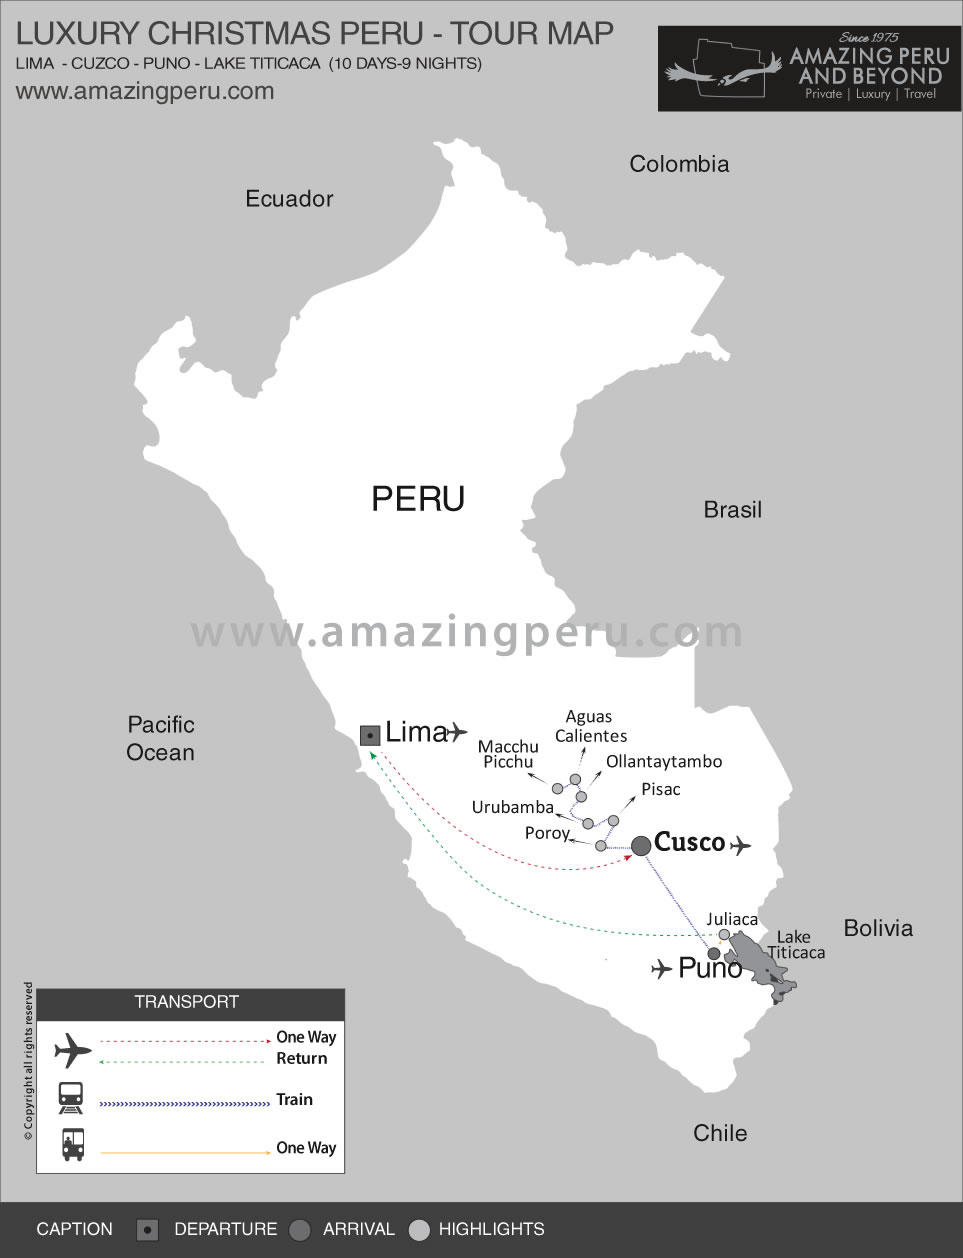 Luxury Christmas Tour to Machu Picchu 2023 - Option 1 - 10 days / 9 nights.